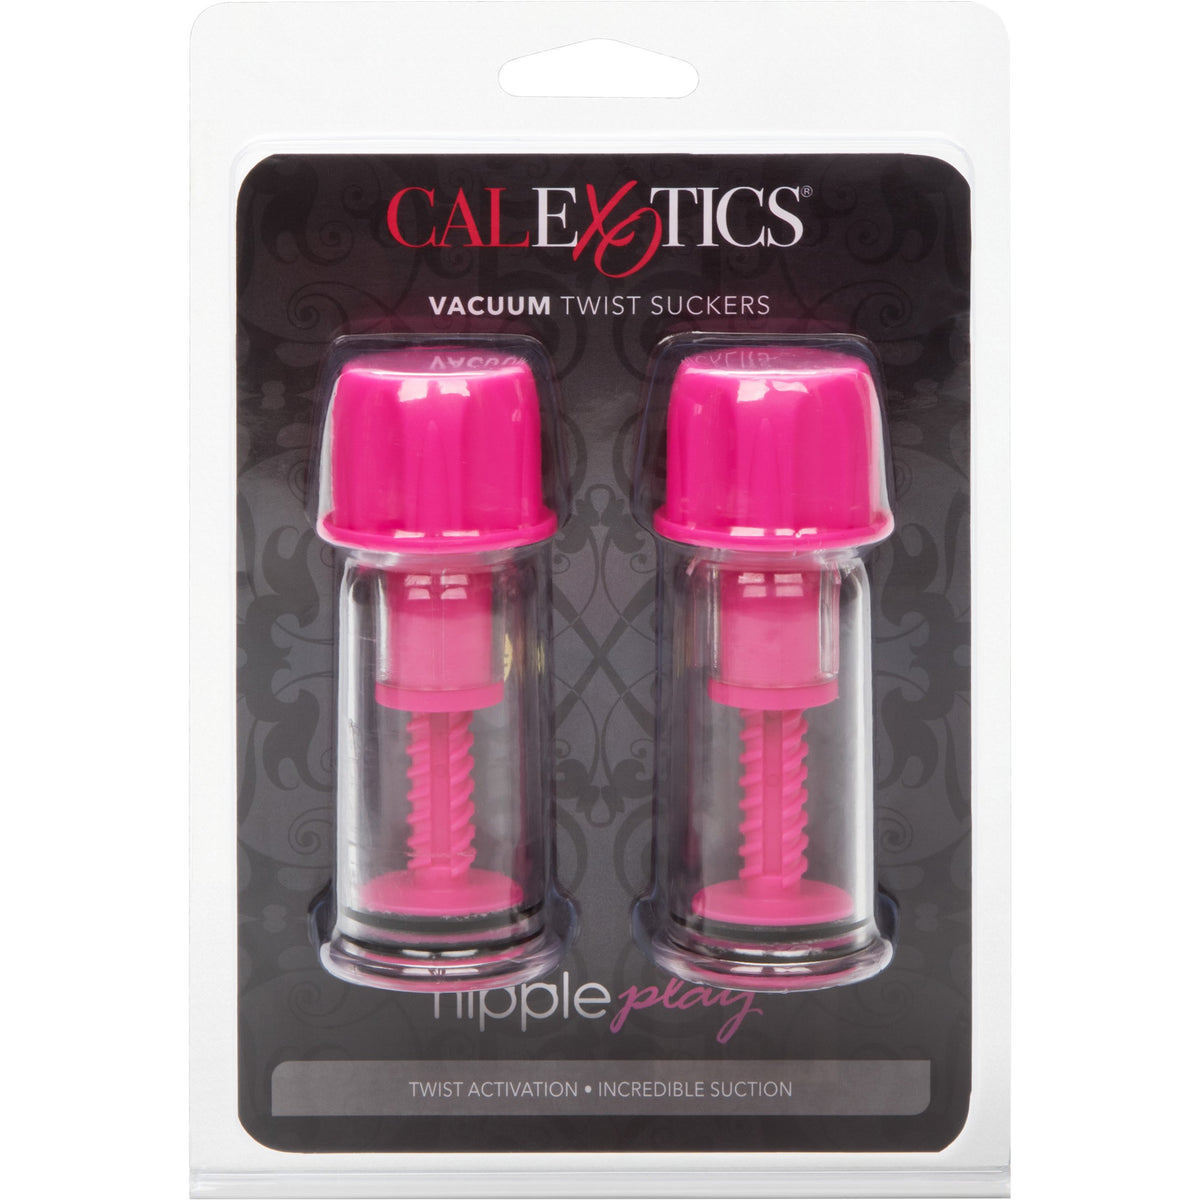 CalExotics Nipple Play Vacuum Twist Suckers - Pink